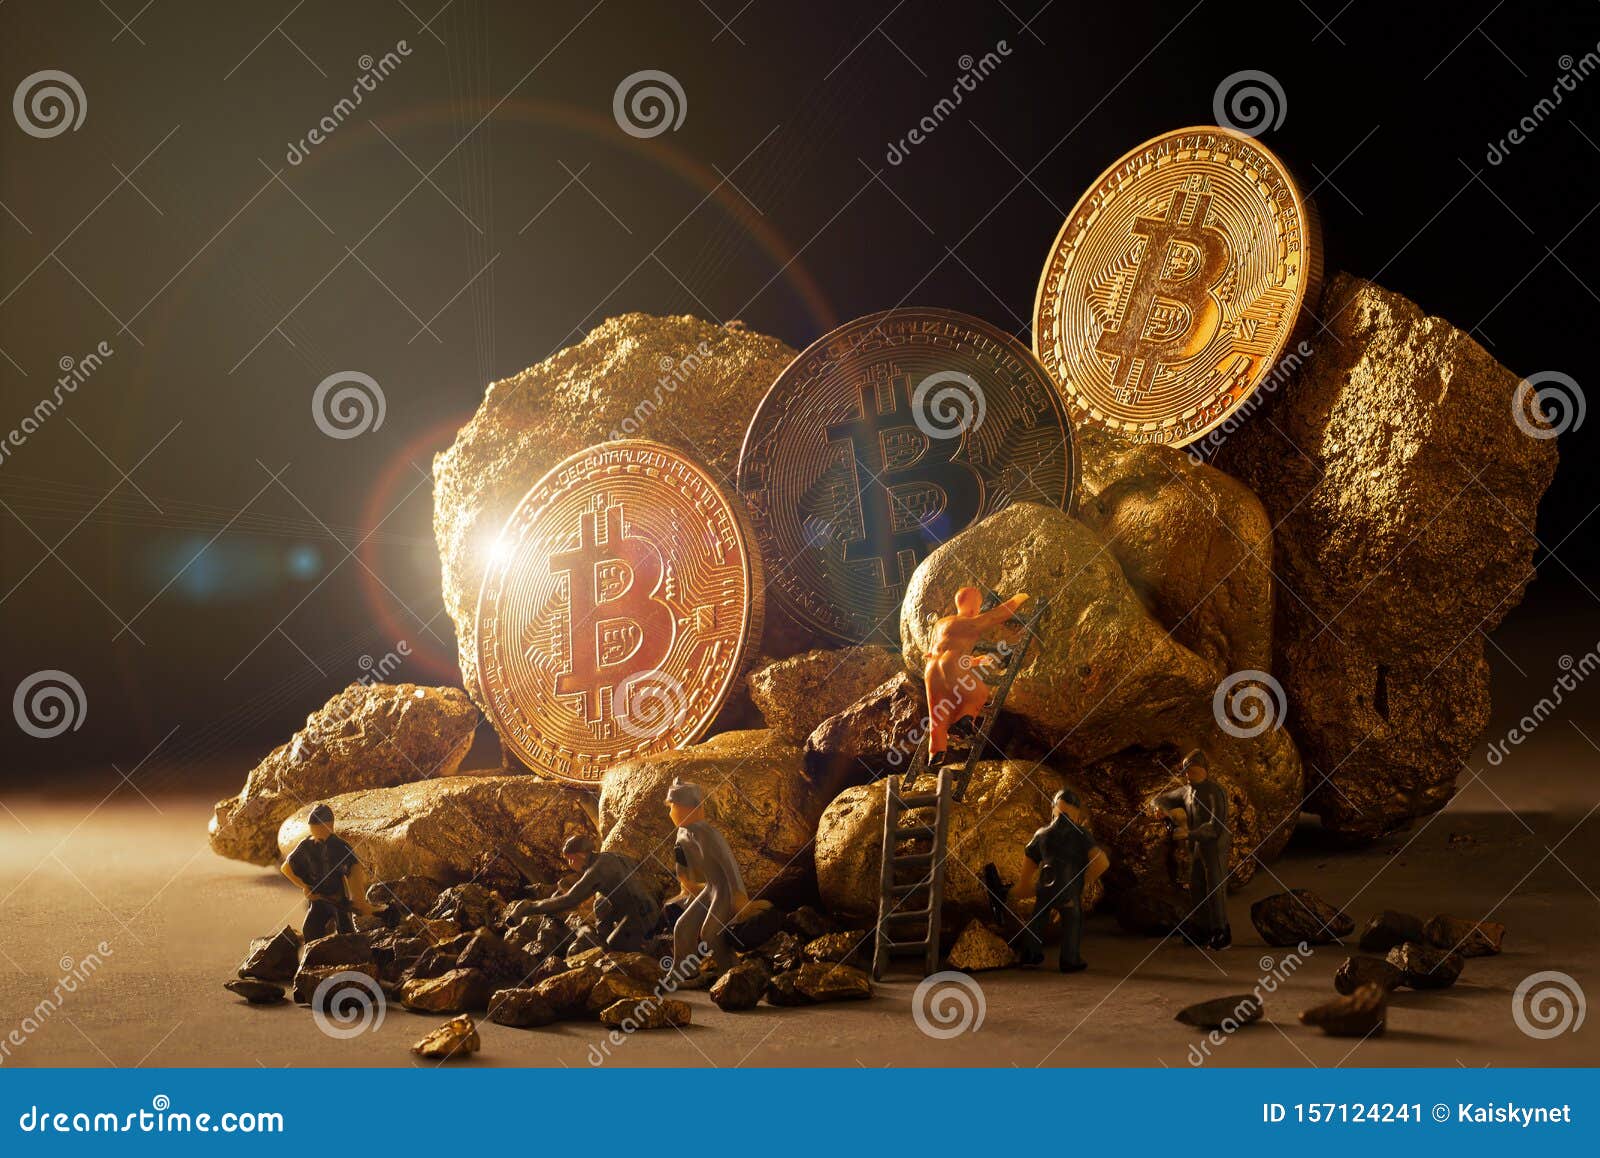 deep bitcoin mining)